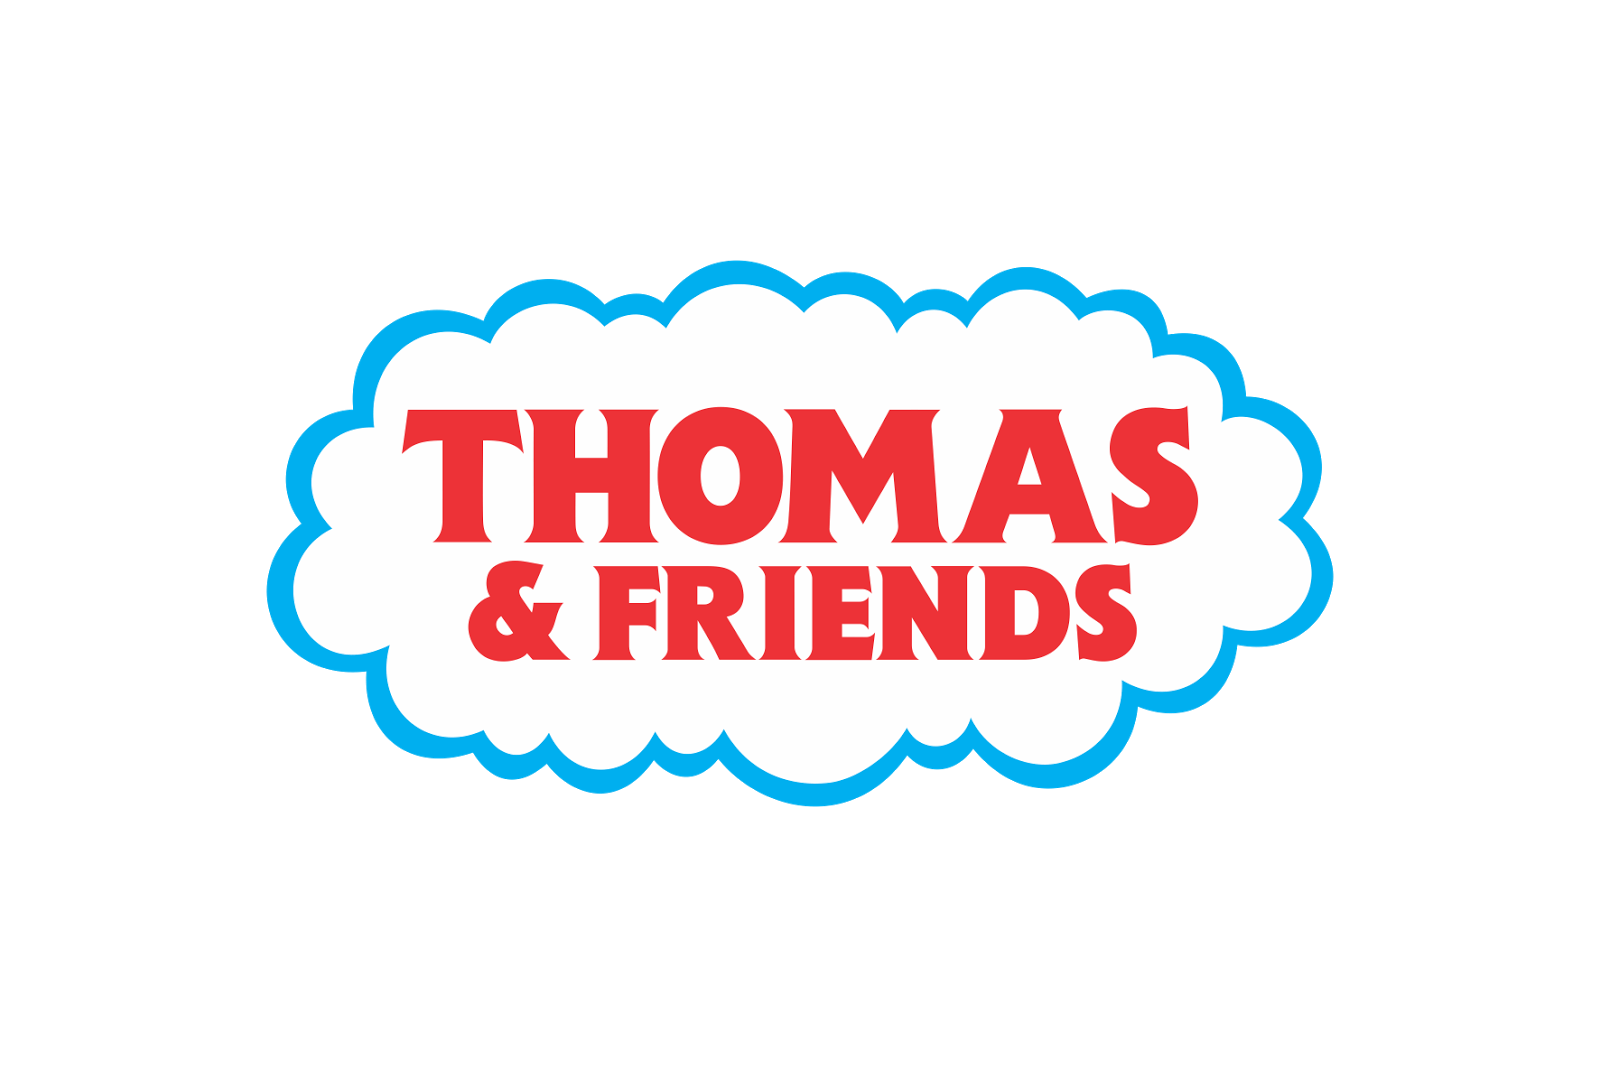 Thomas the Train Logo - Thomas and Friends. International Entertainment Project